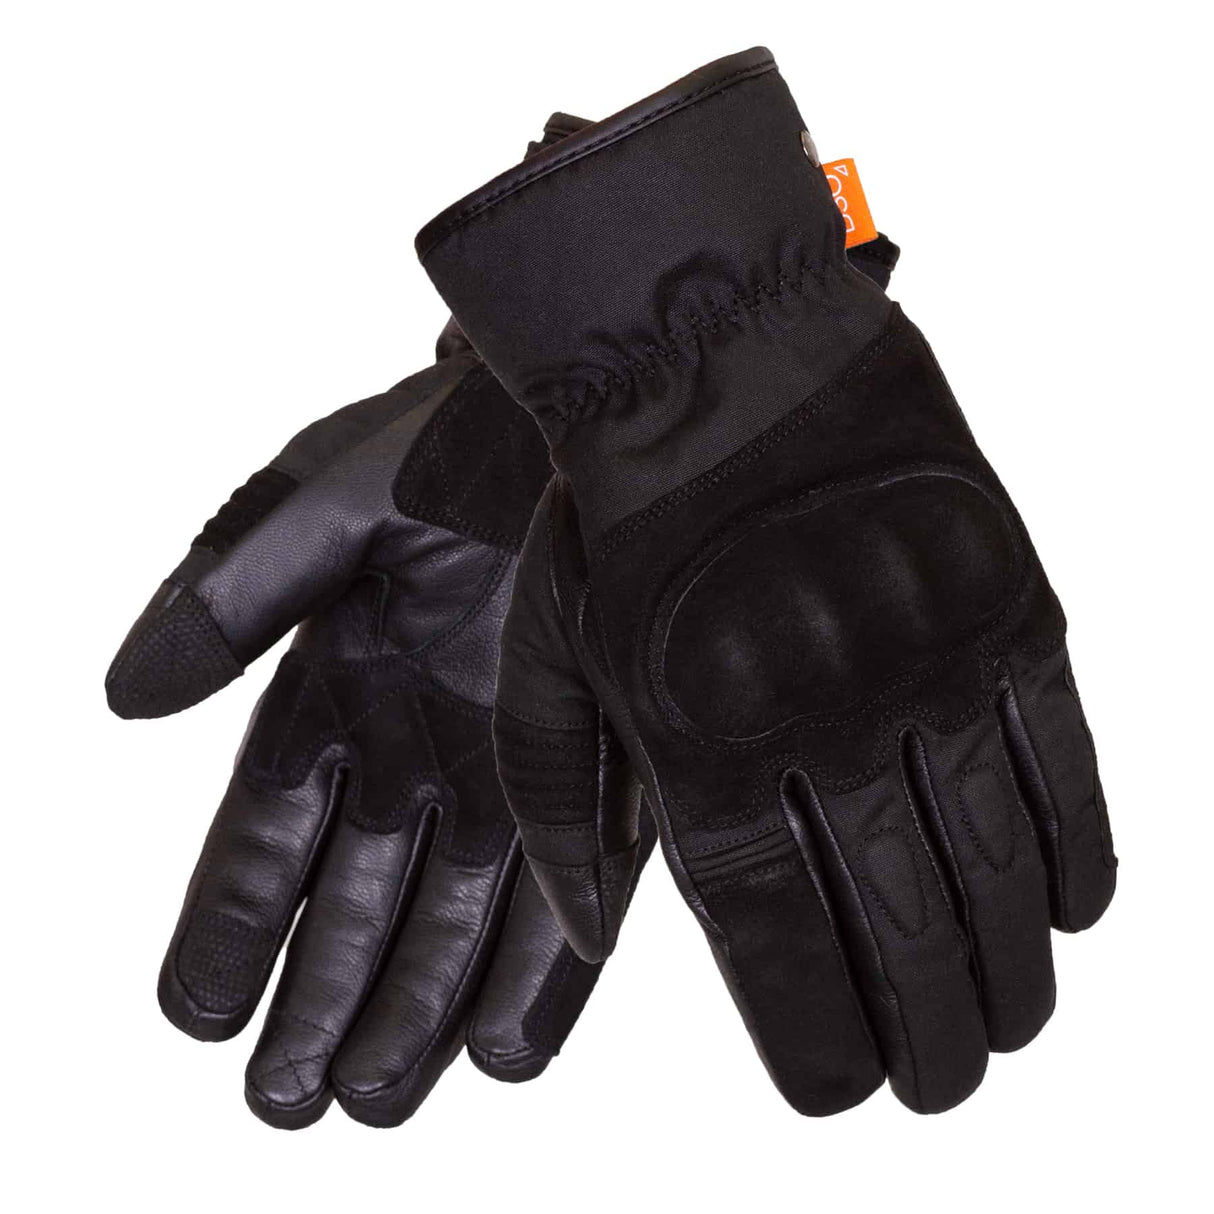 Merlin Ranton II D30 WP Gloves  - Olive